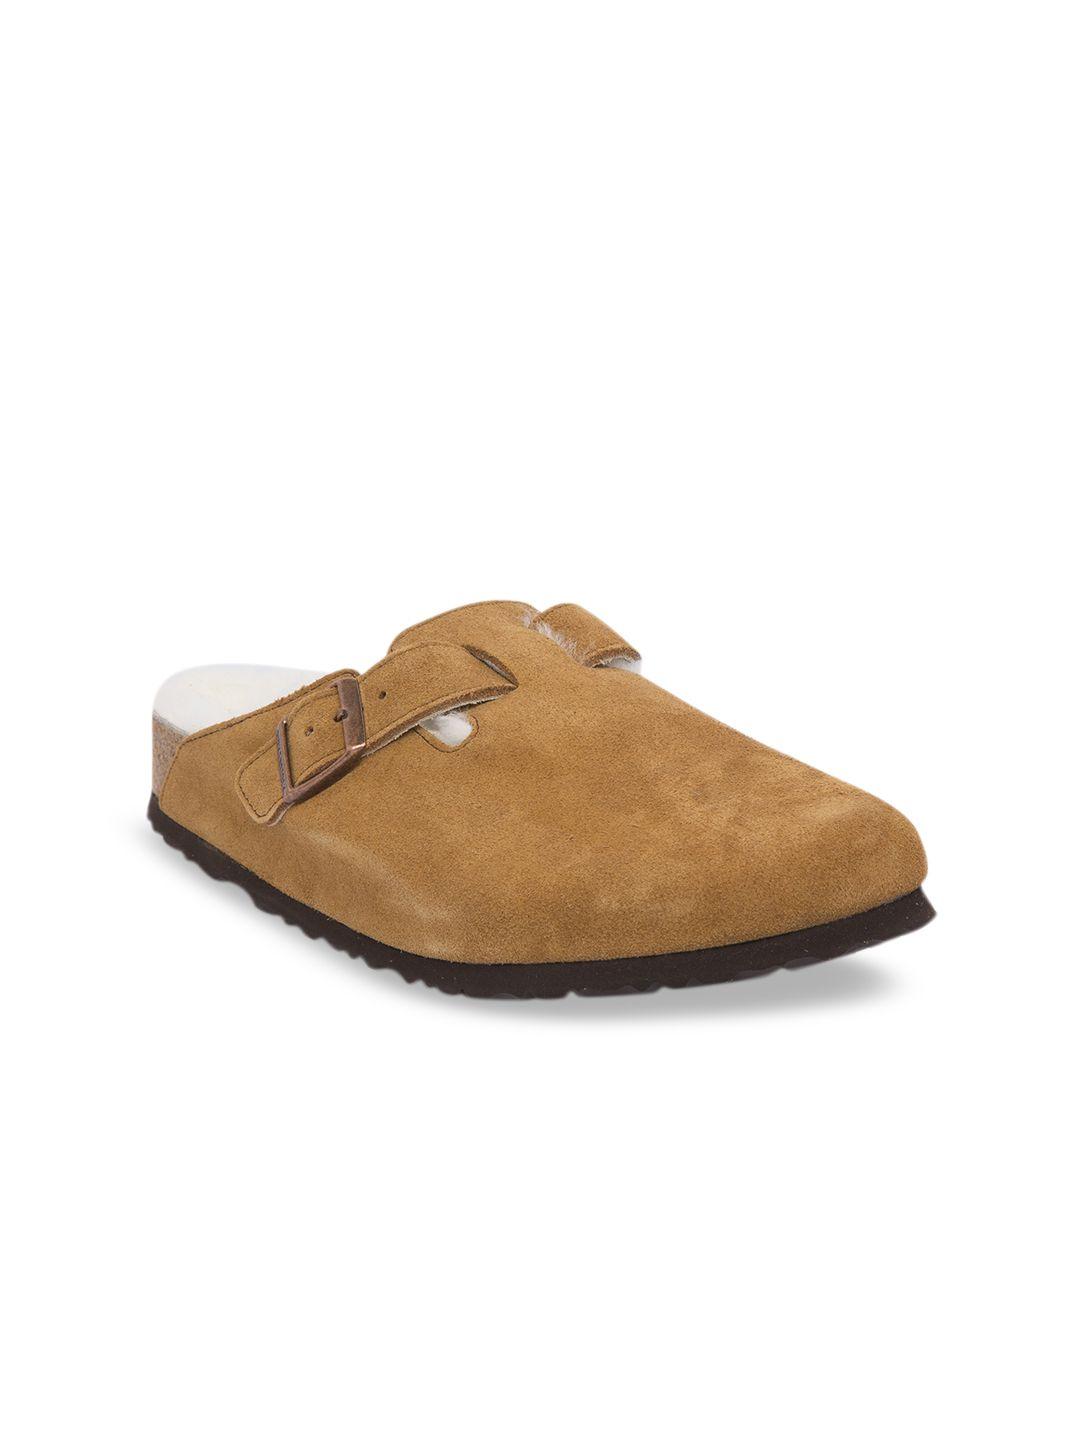 birkenstock unisex brown boston suede regular width leather sandals